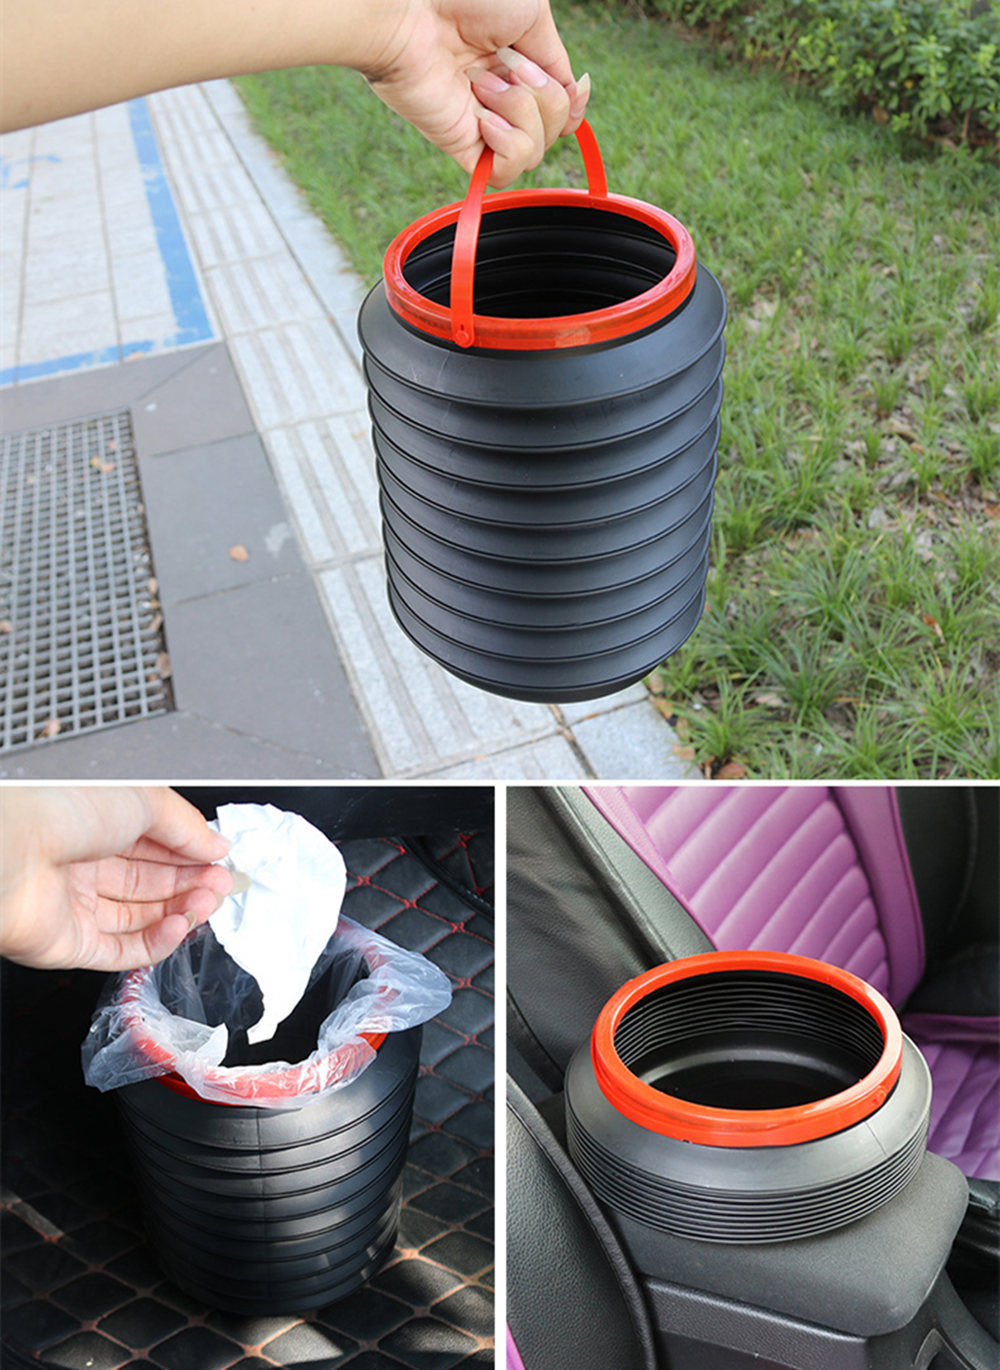 Auto Barrel Foldable Trash Wash Storage For Universal Cars